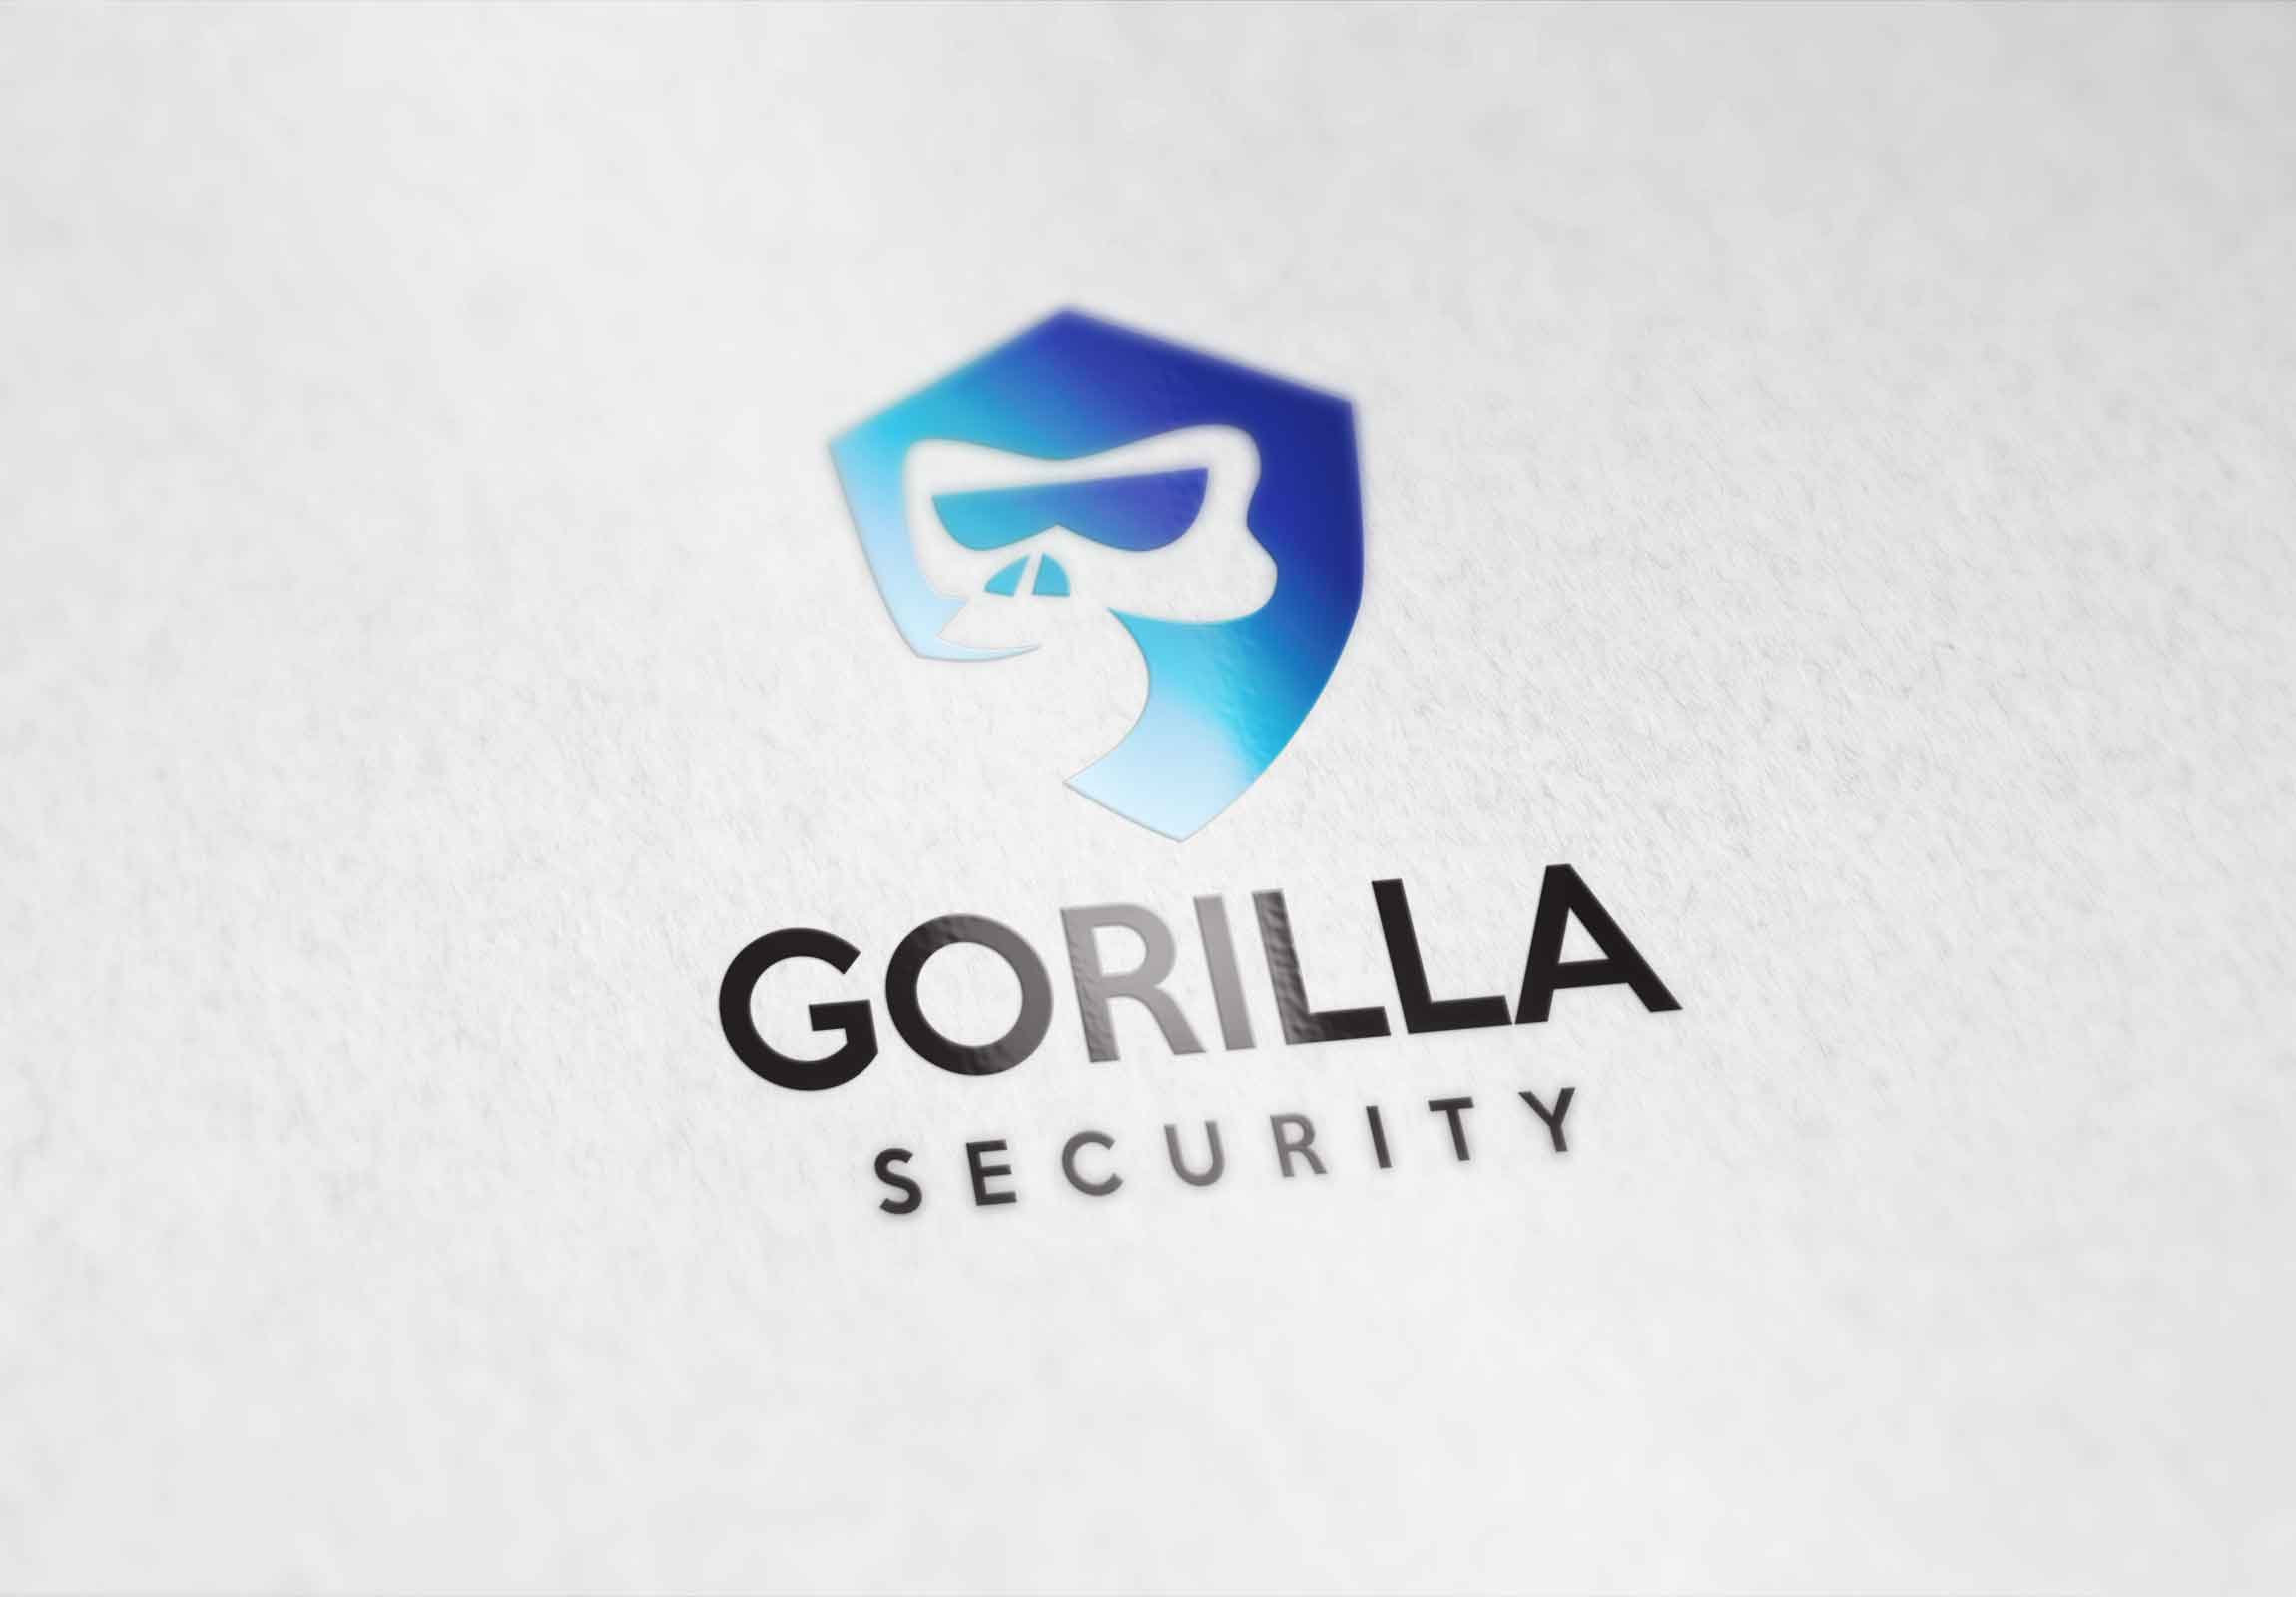 Security Gorilla Logo cover image.